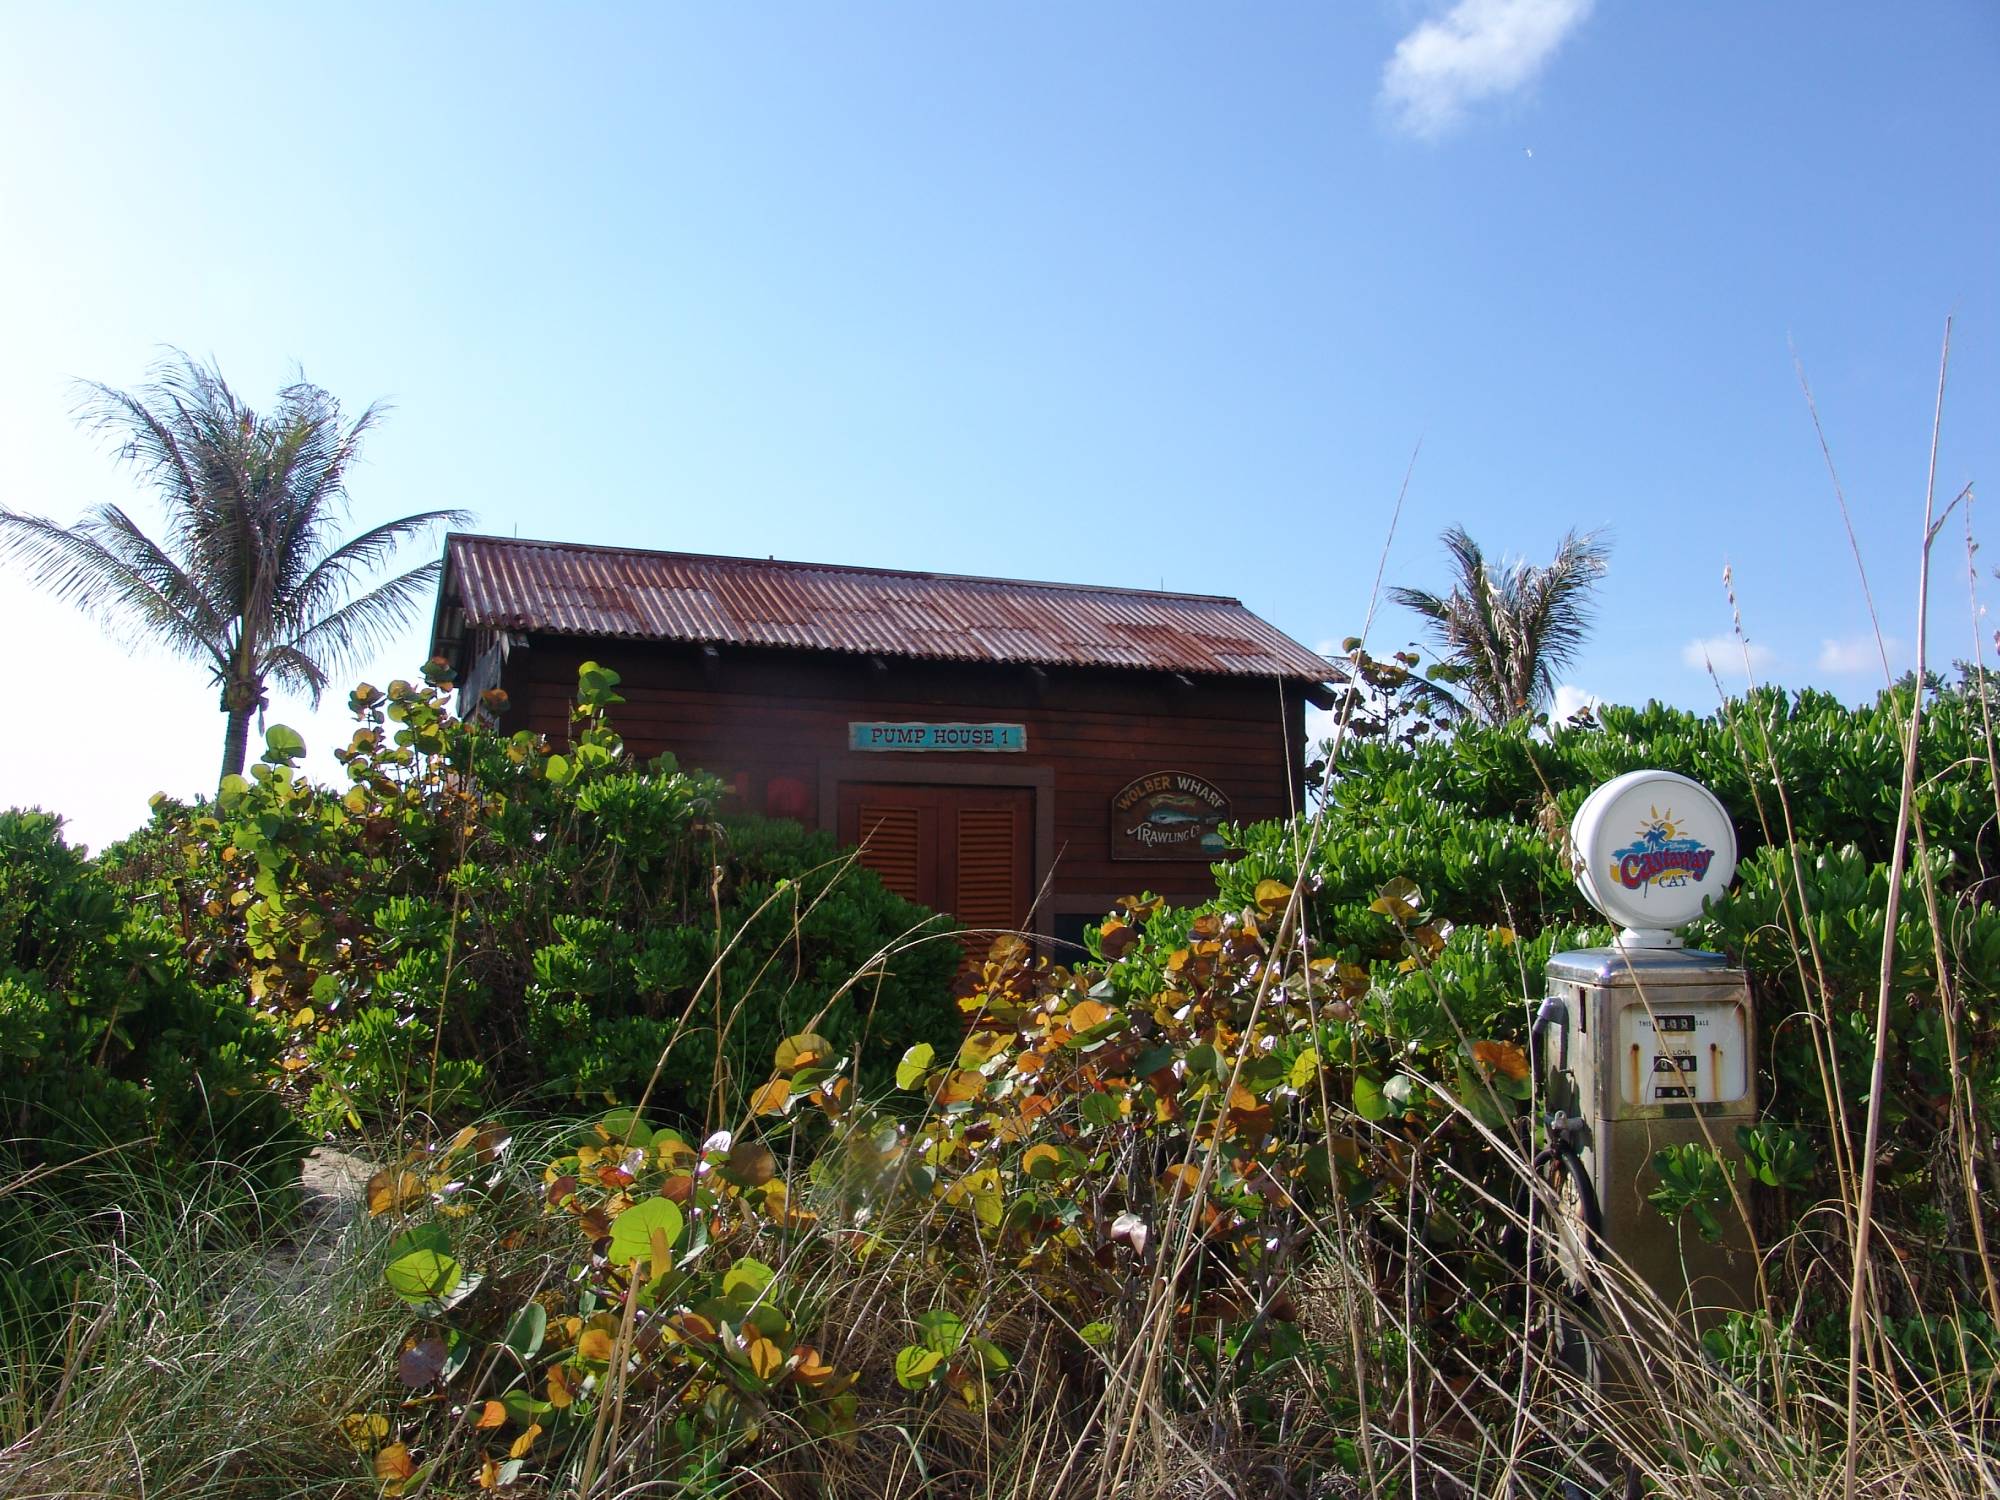 Castaway Cay - pumo house